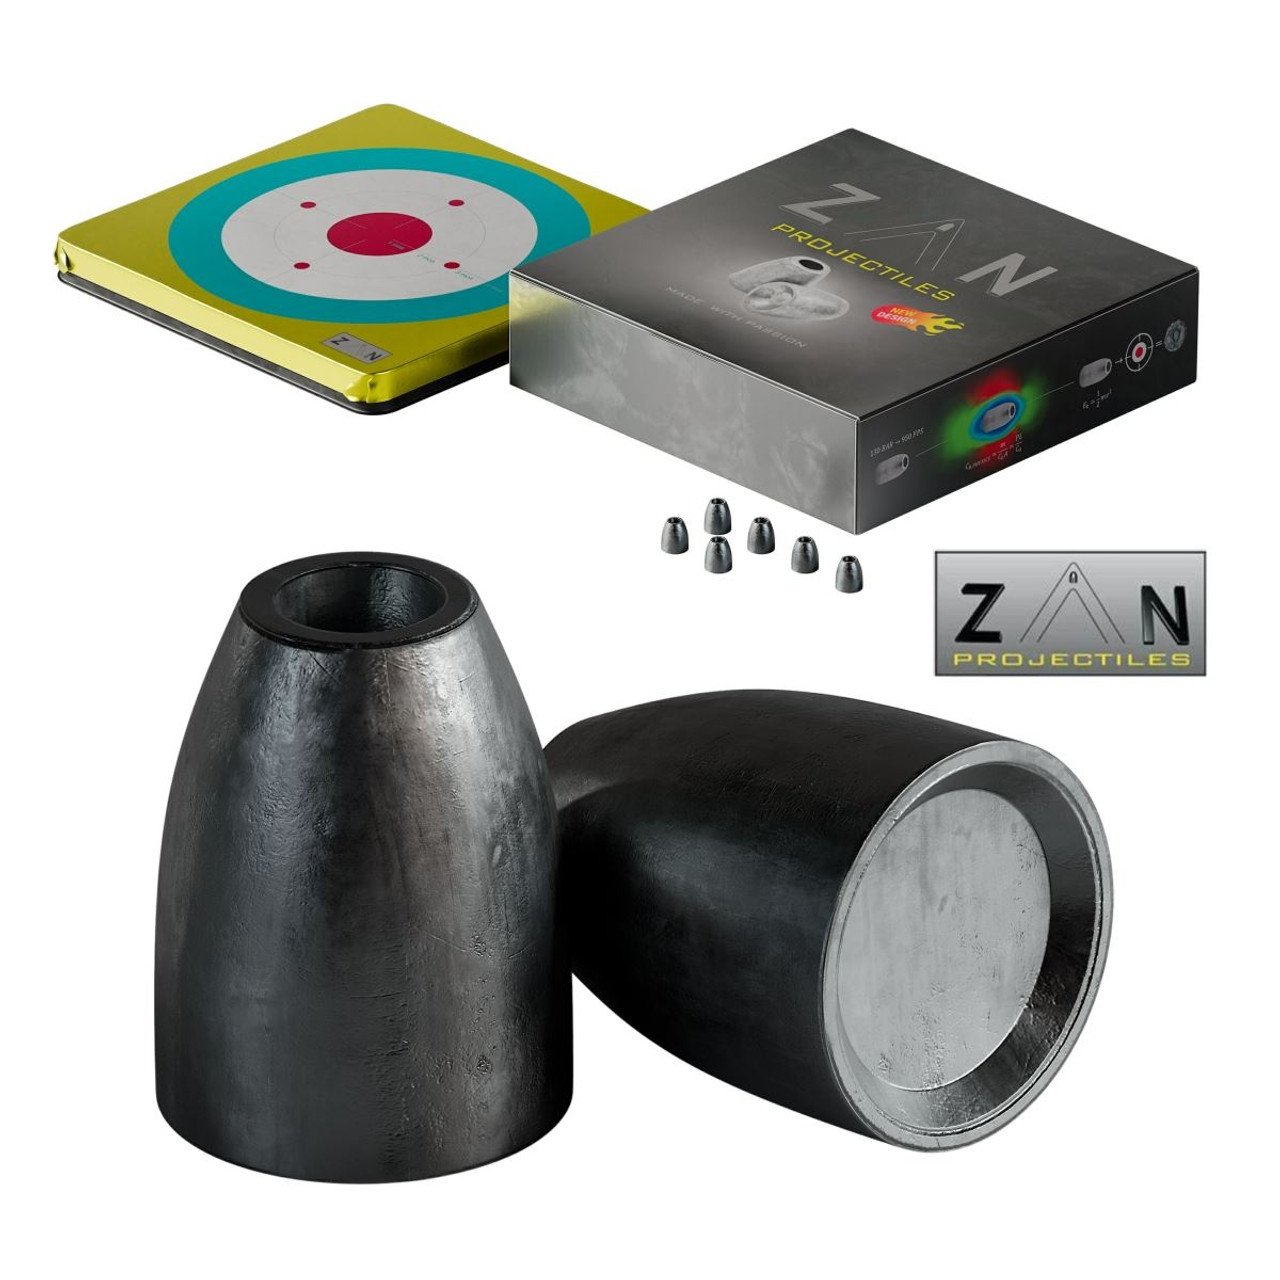 ZAN Projectiles Slugs .22 28gr .217 HP Hollow Point Pellets for Air Rifles